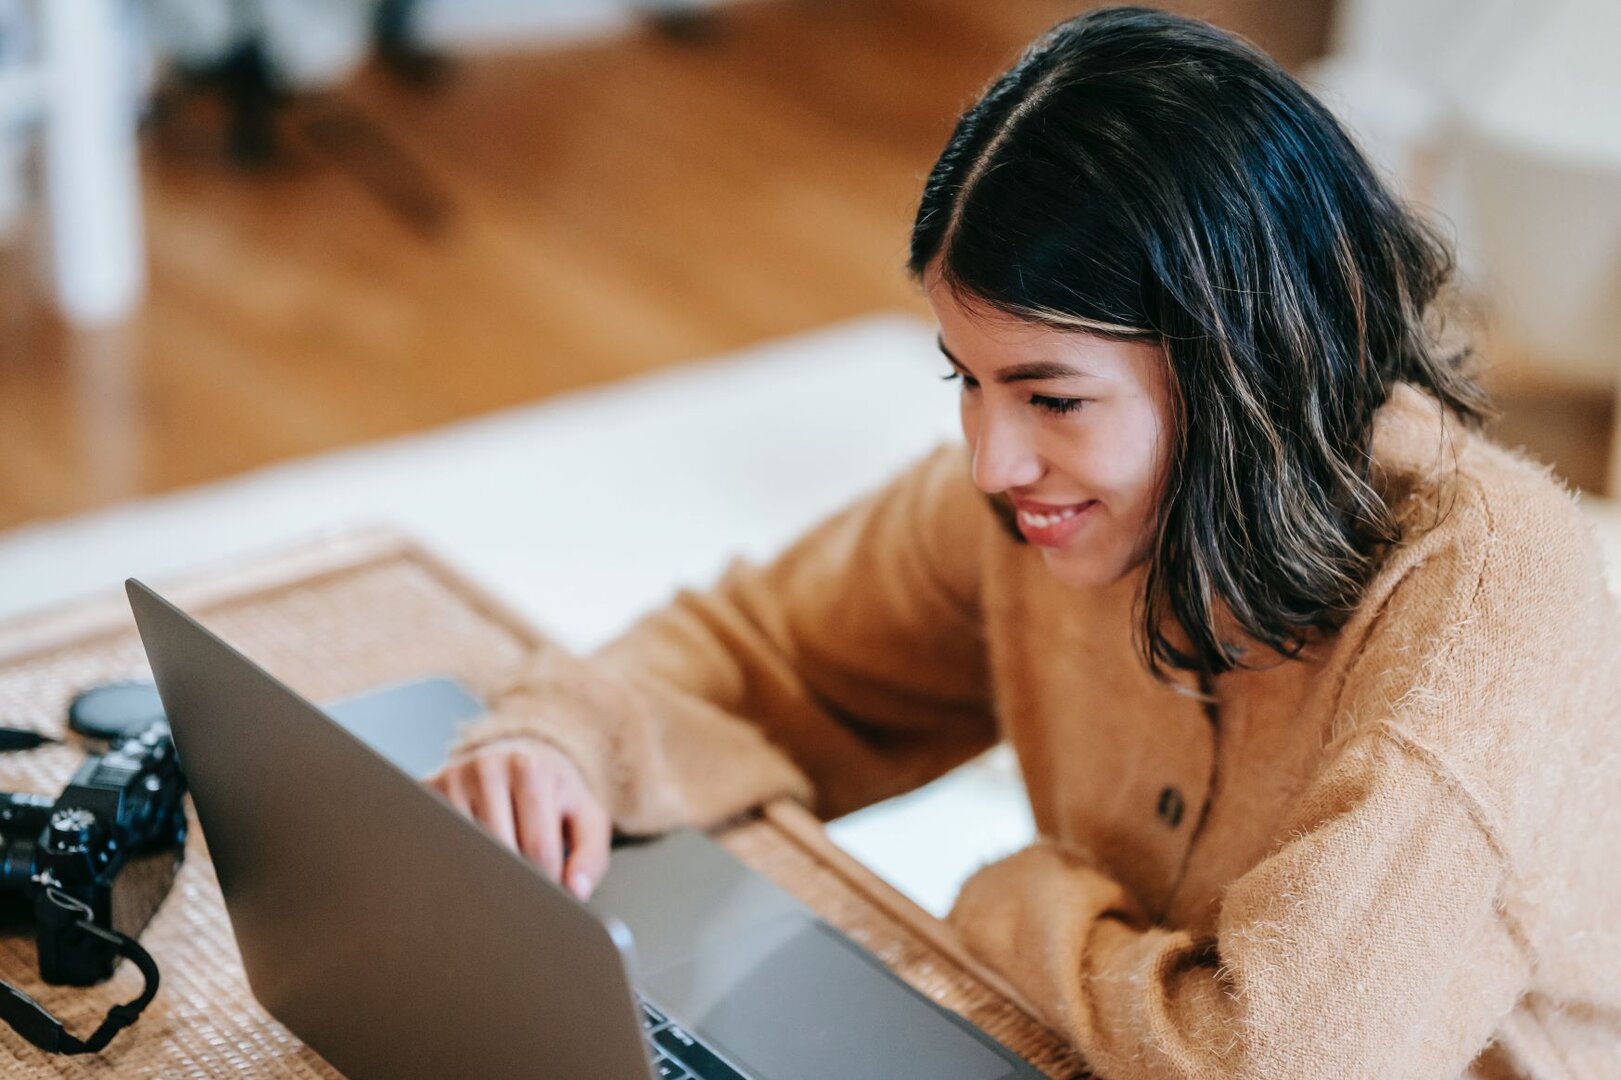 Girl sitting smiling in front of laptop CV